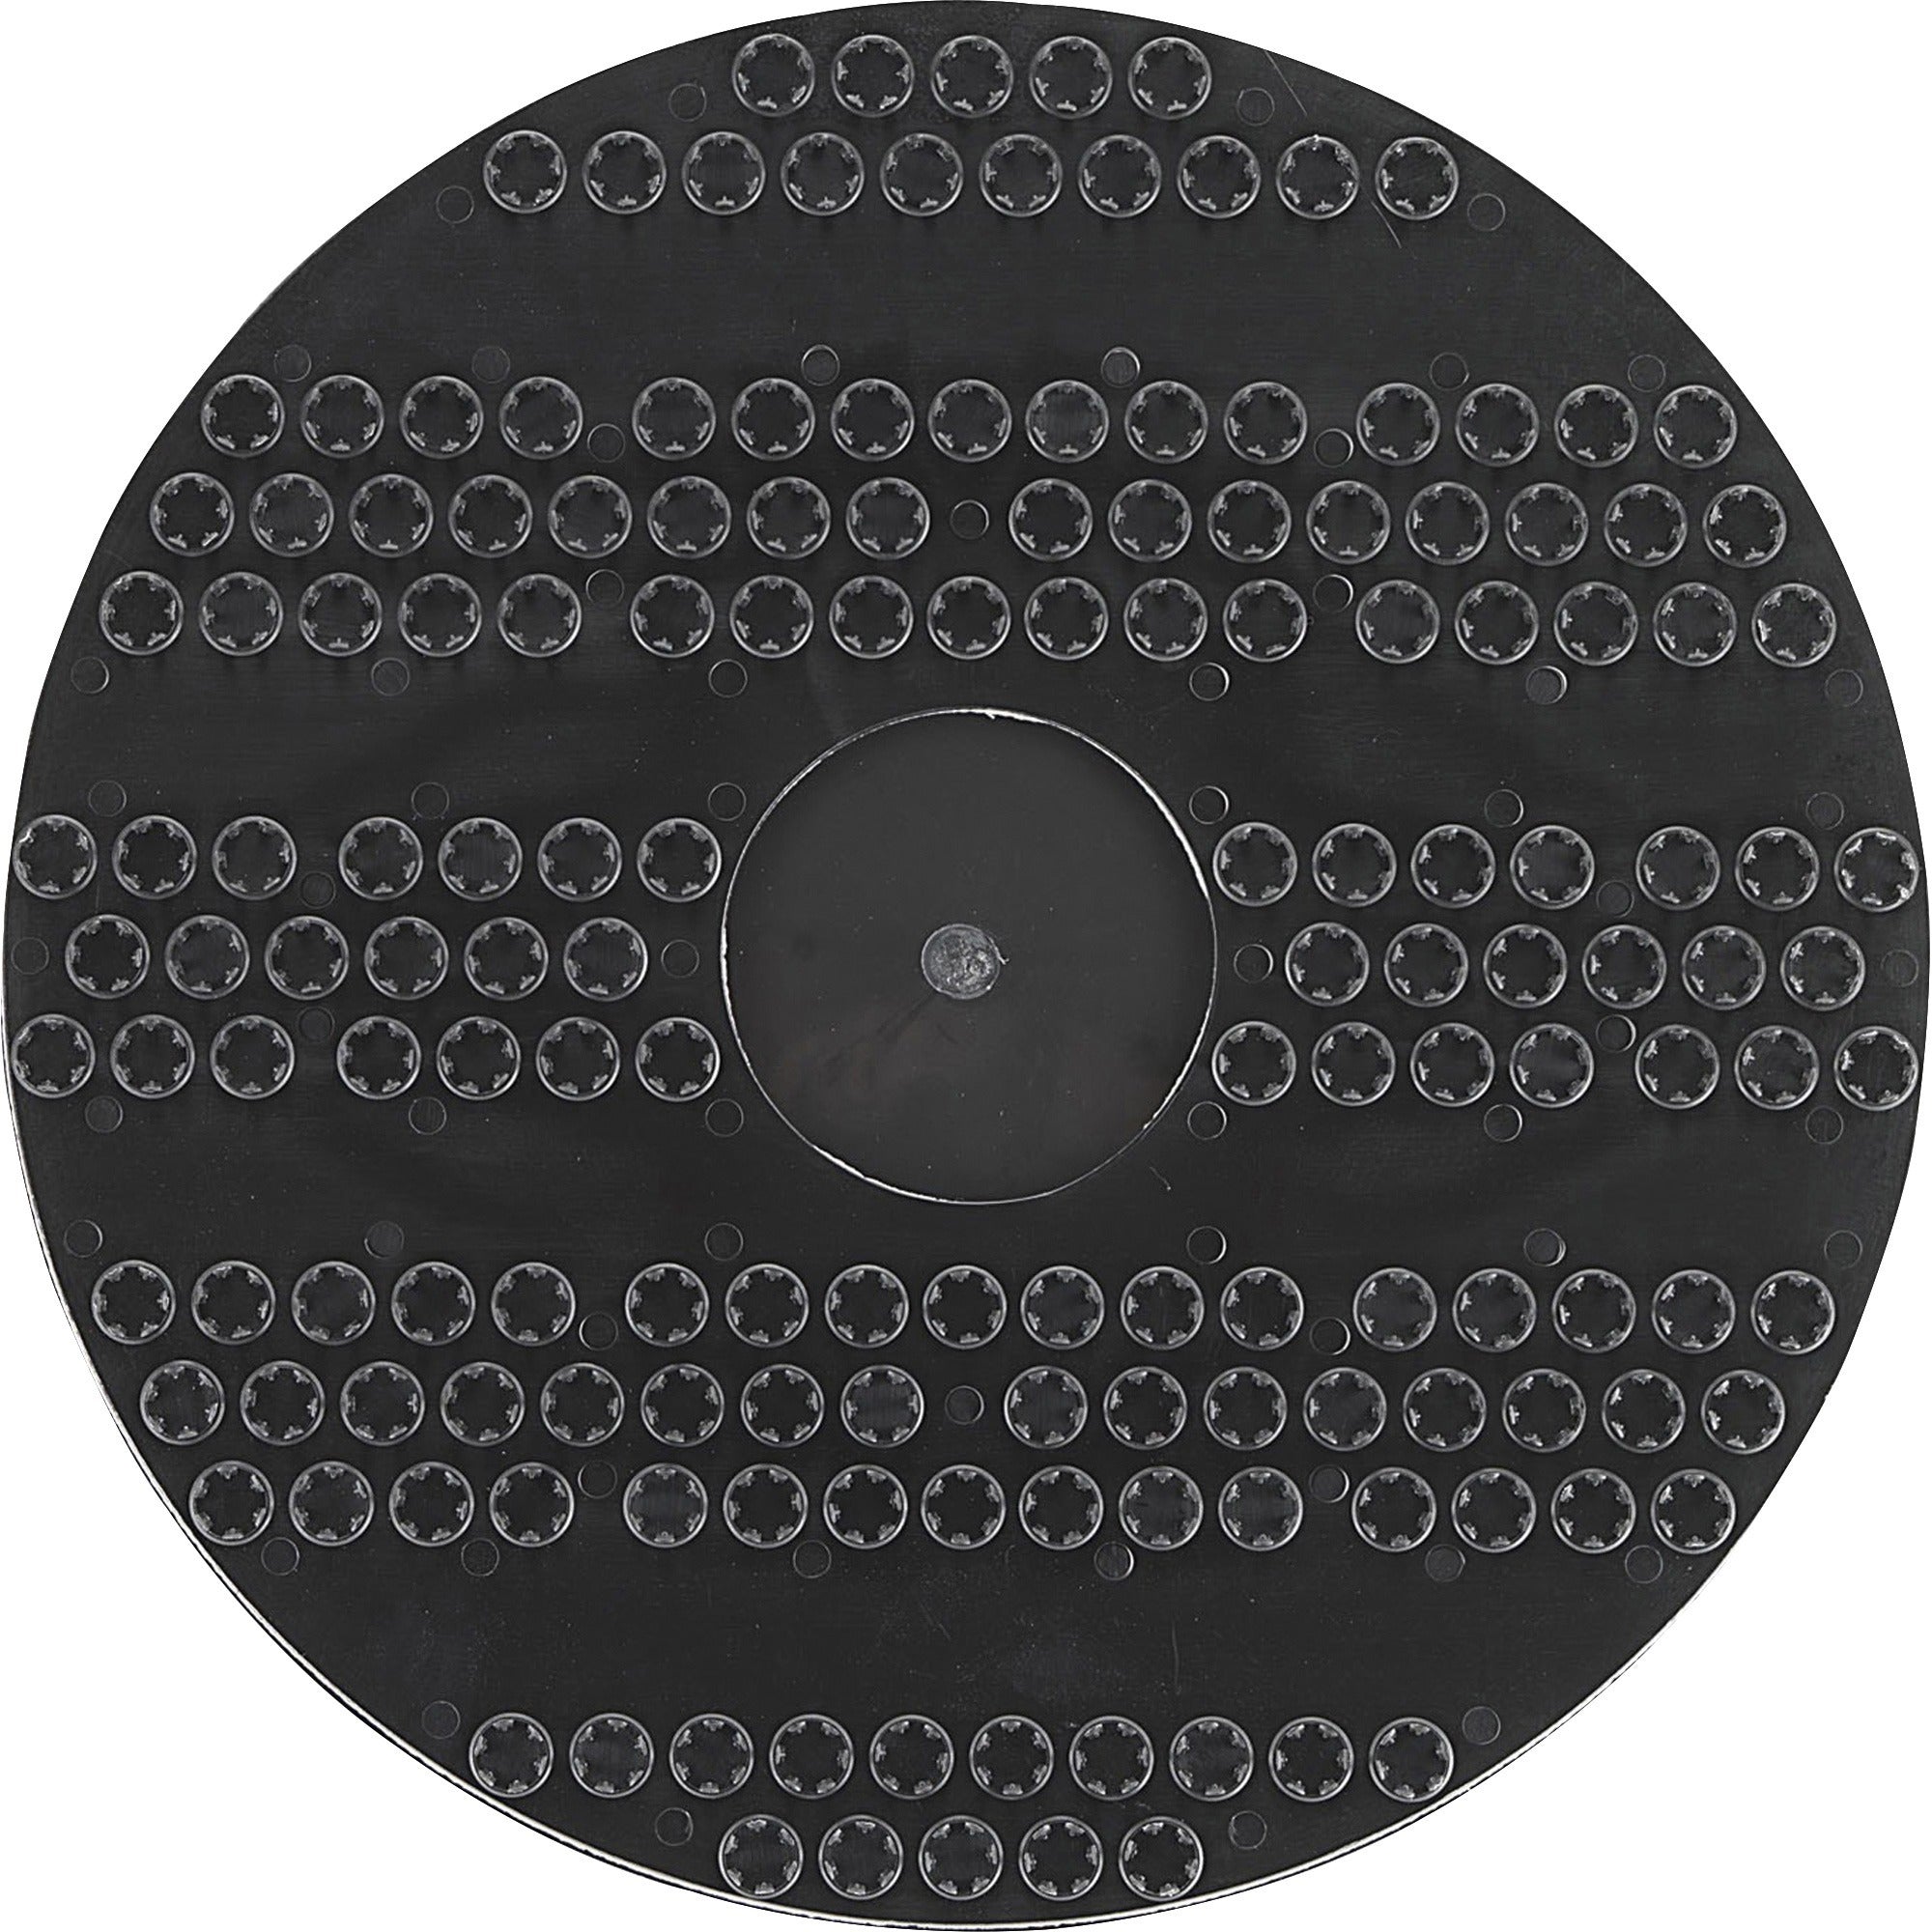 oreck-orbiter-floor-machine-drive-pad-holder-10-width-x-2-height-x-10-length-1-each-black-plastic_ork5317851032 - 2